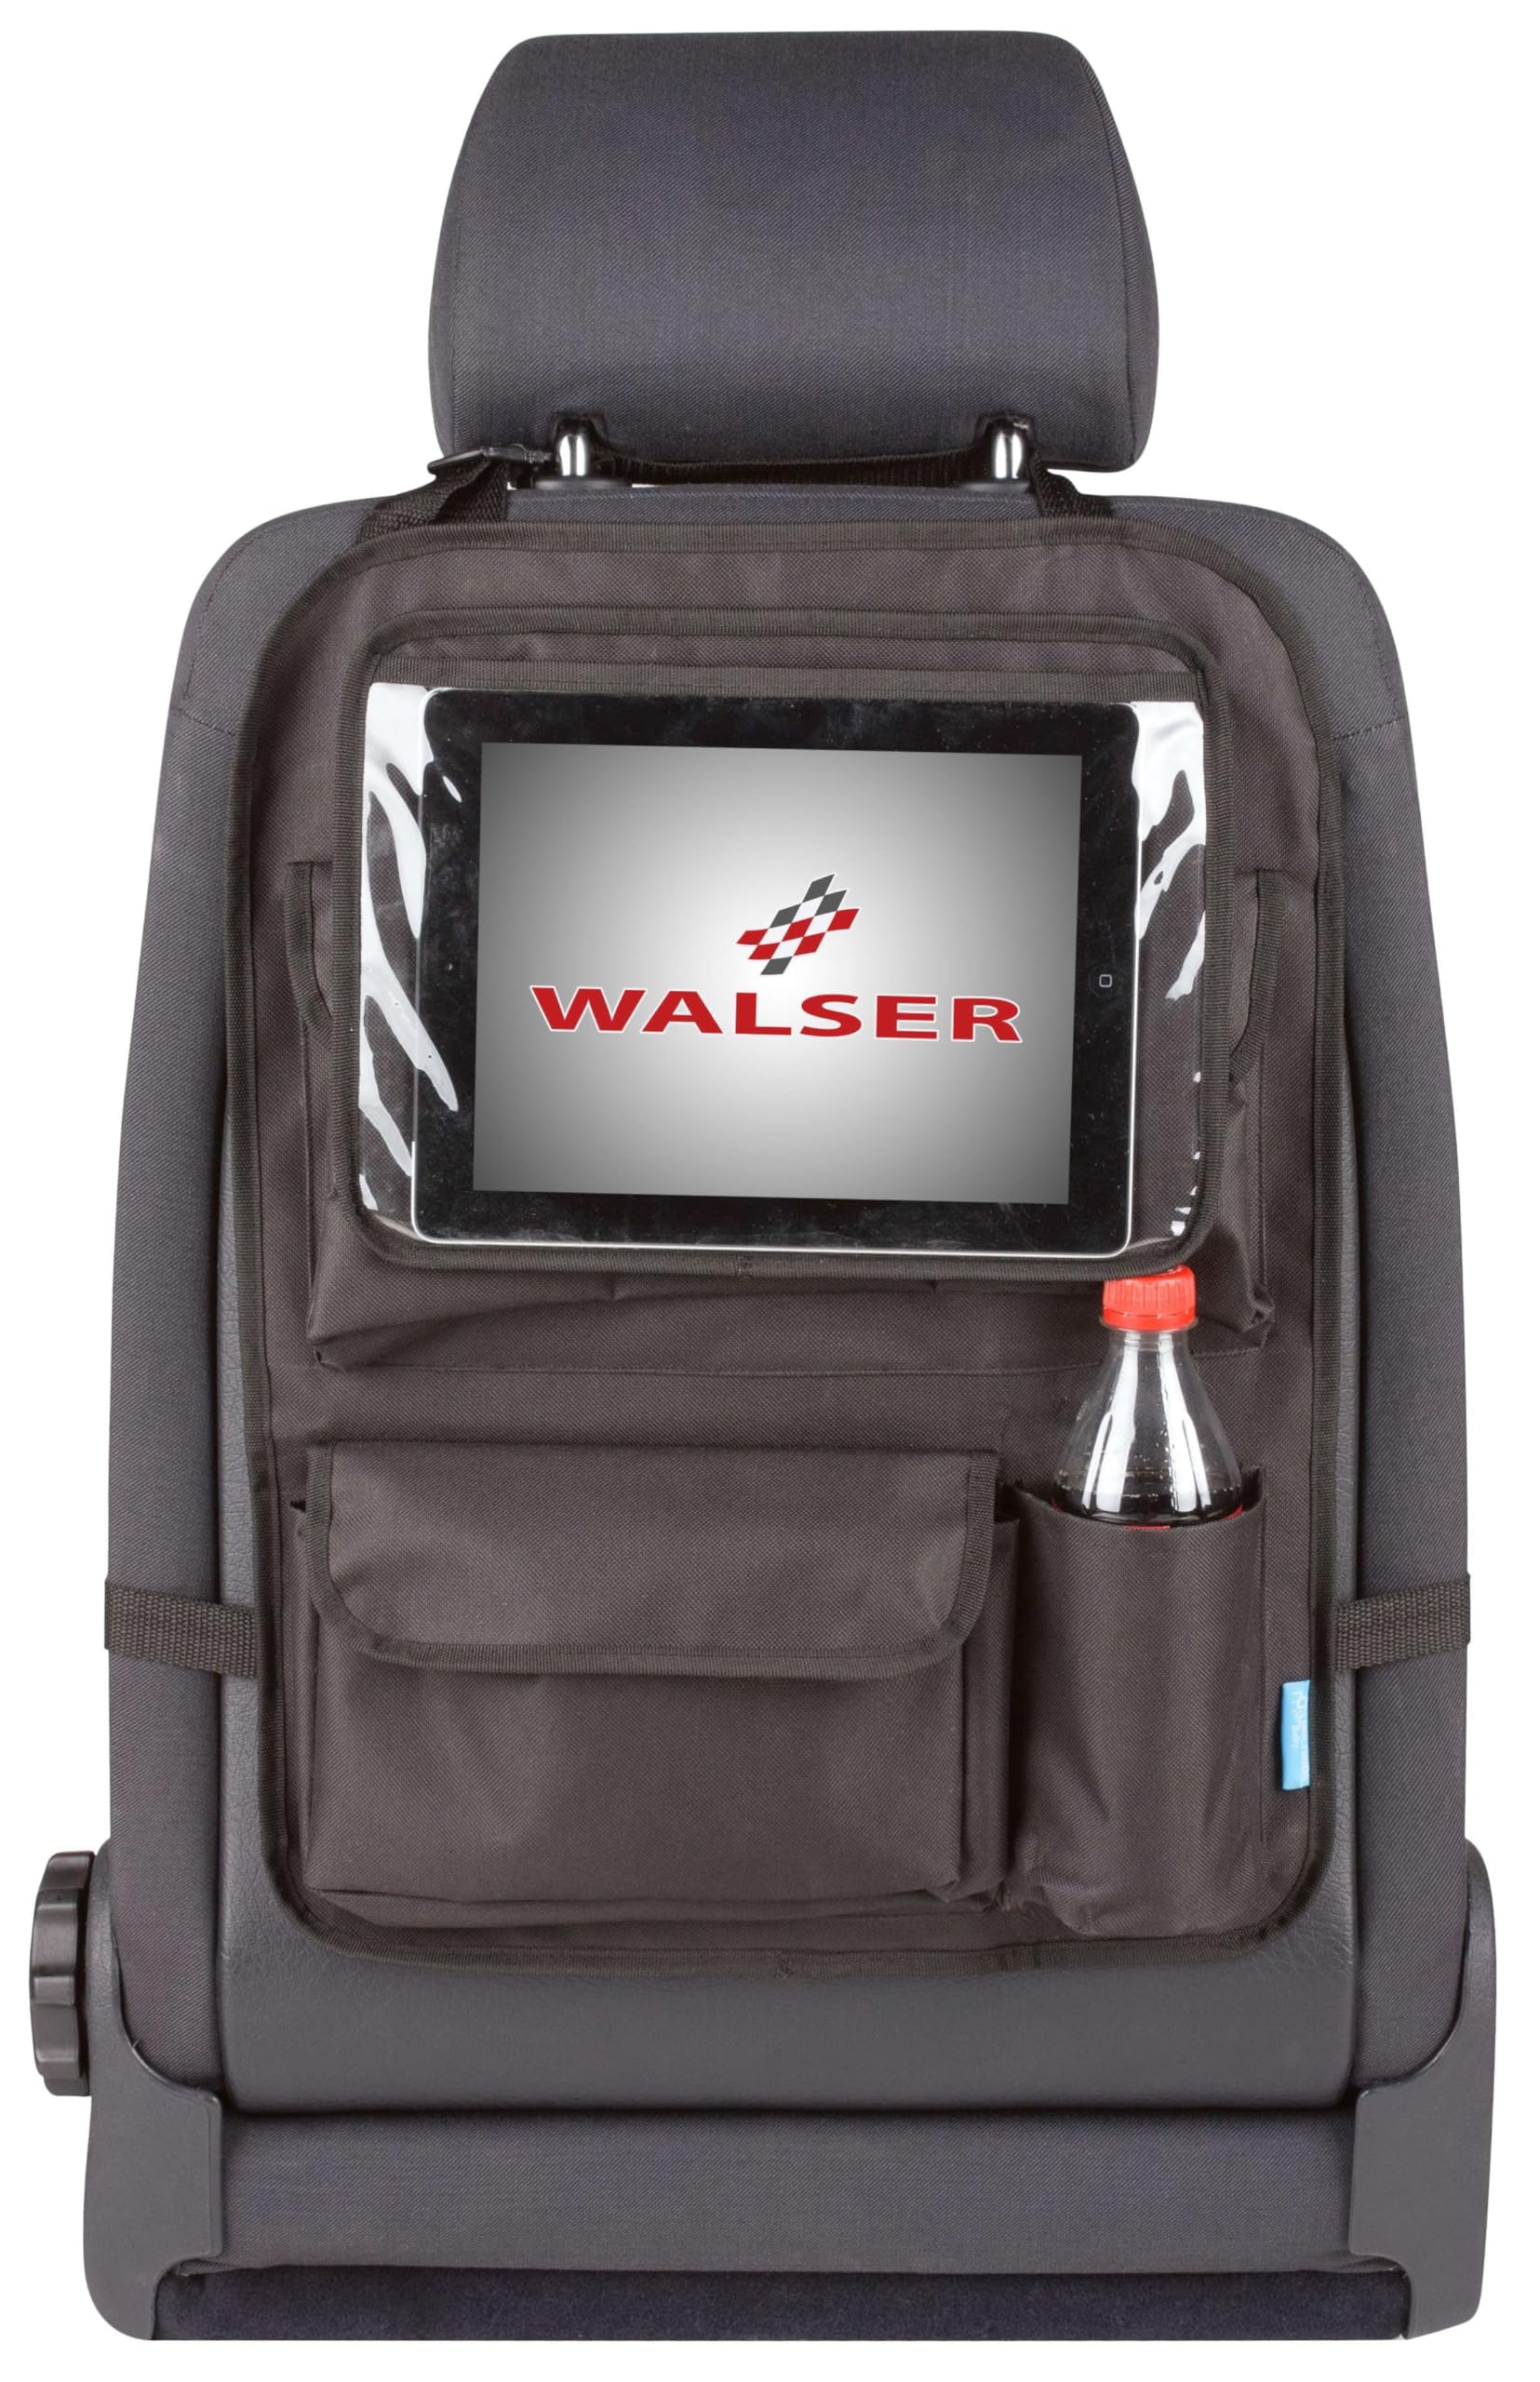 Walser Auto-Rücksitztasche Maxi mit abnehmbarem Tablet-Halter, Auto-Organizer, Auto-Trittschutz, Rücksitzschoner schwarz von Walser